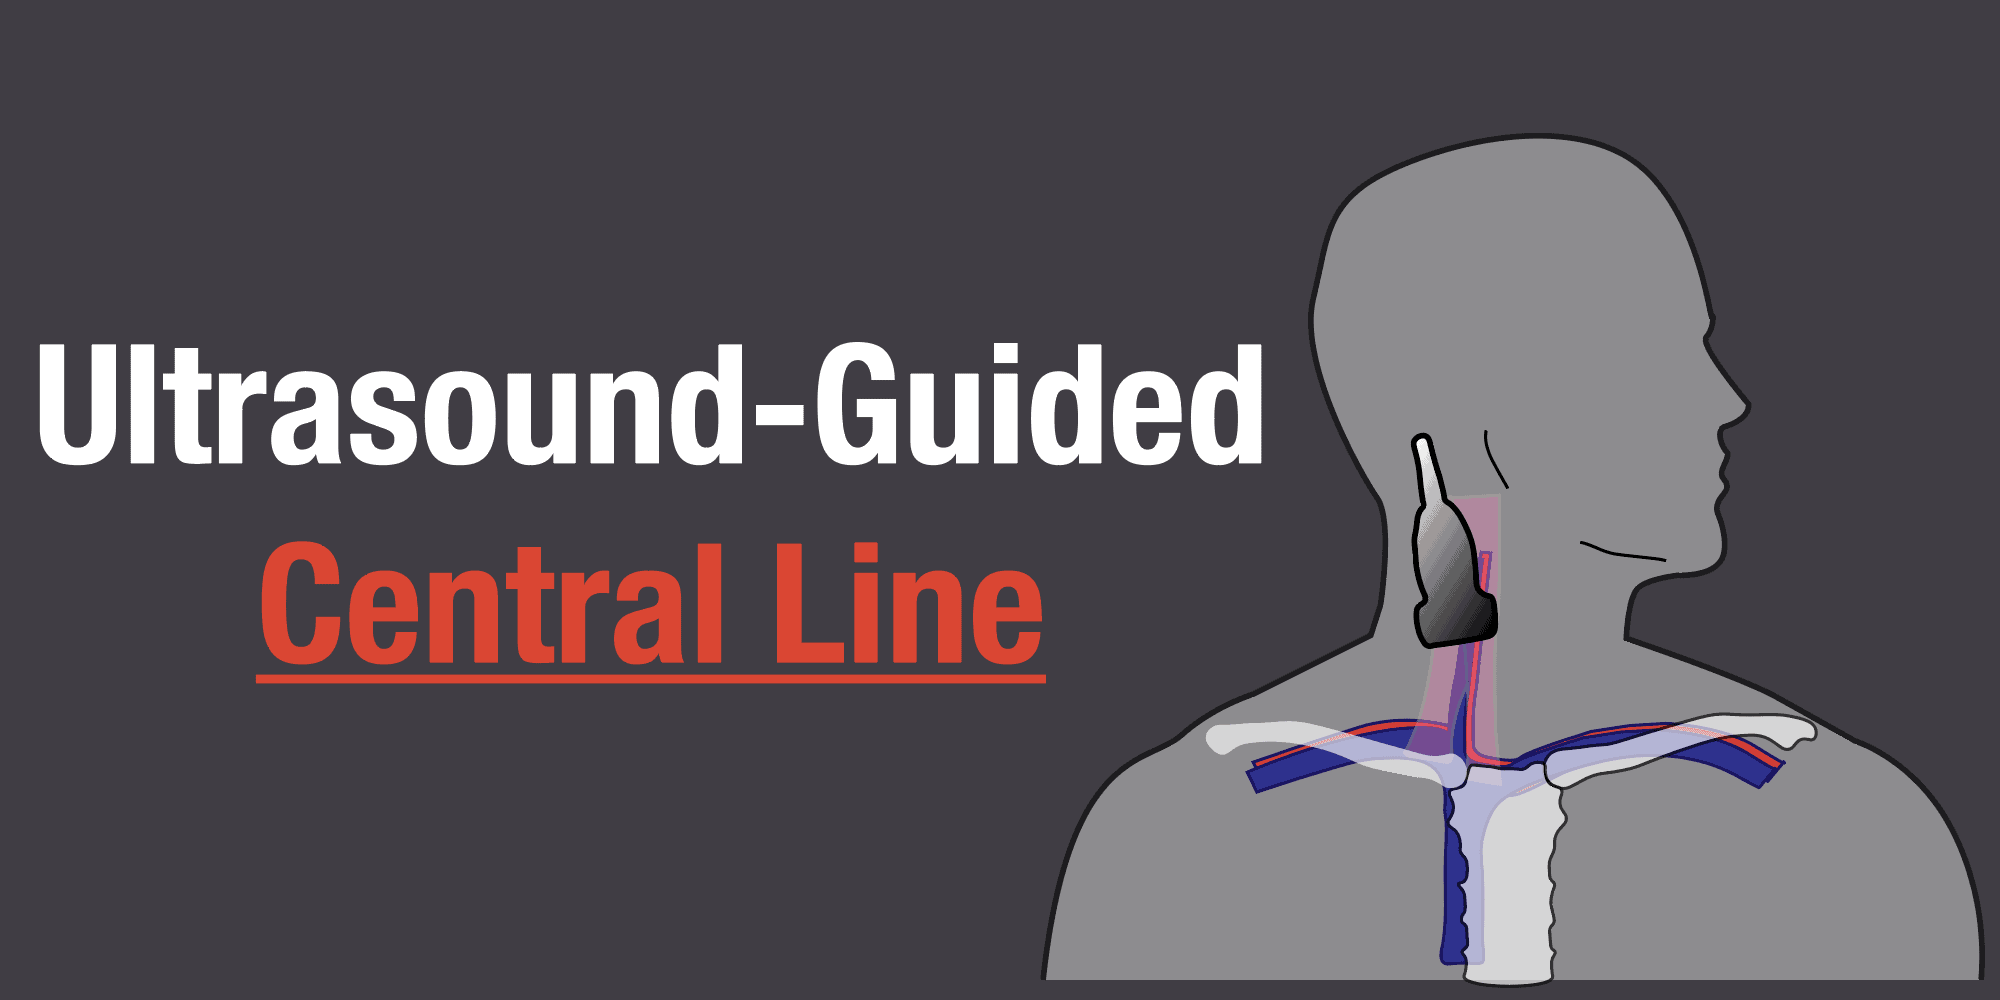 subclavian vein central line landmarks